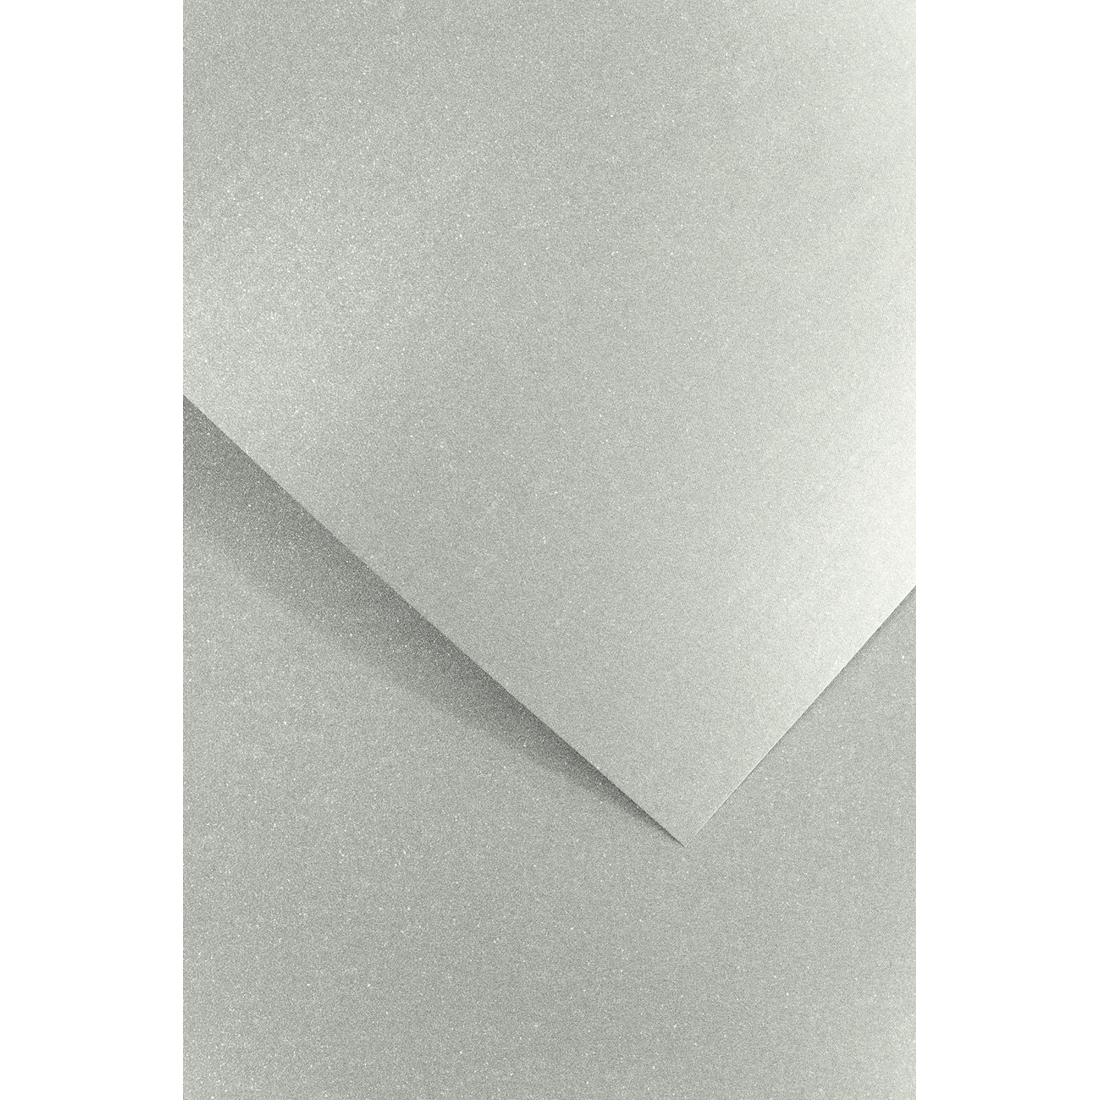 Ozdobný papír Millenium, stříbrný, 180g, 20ks